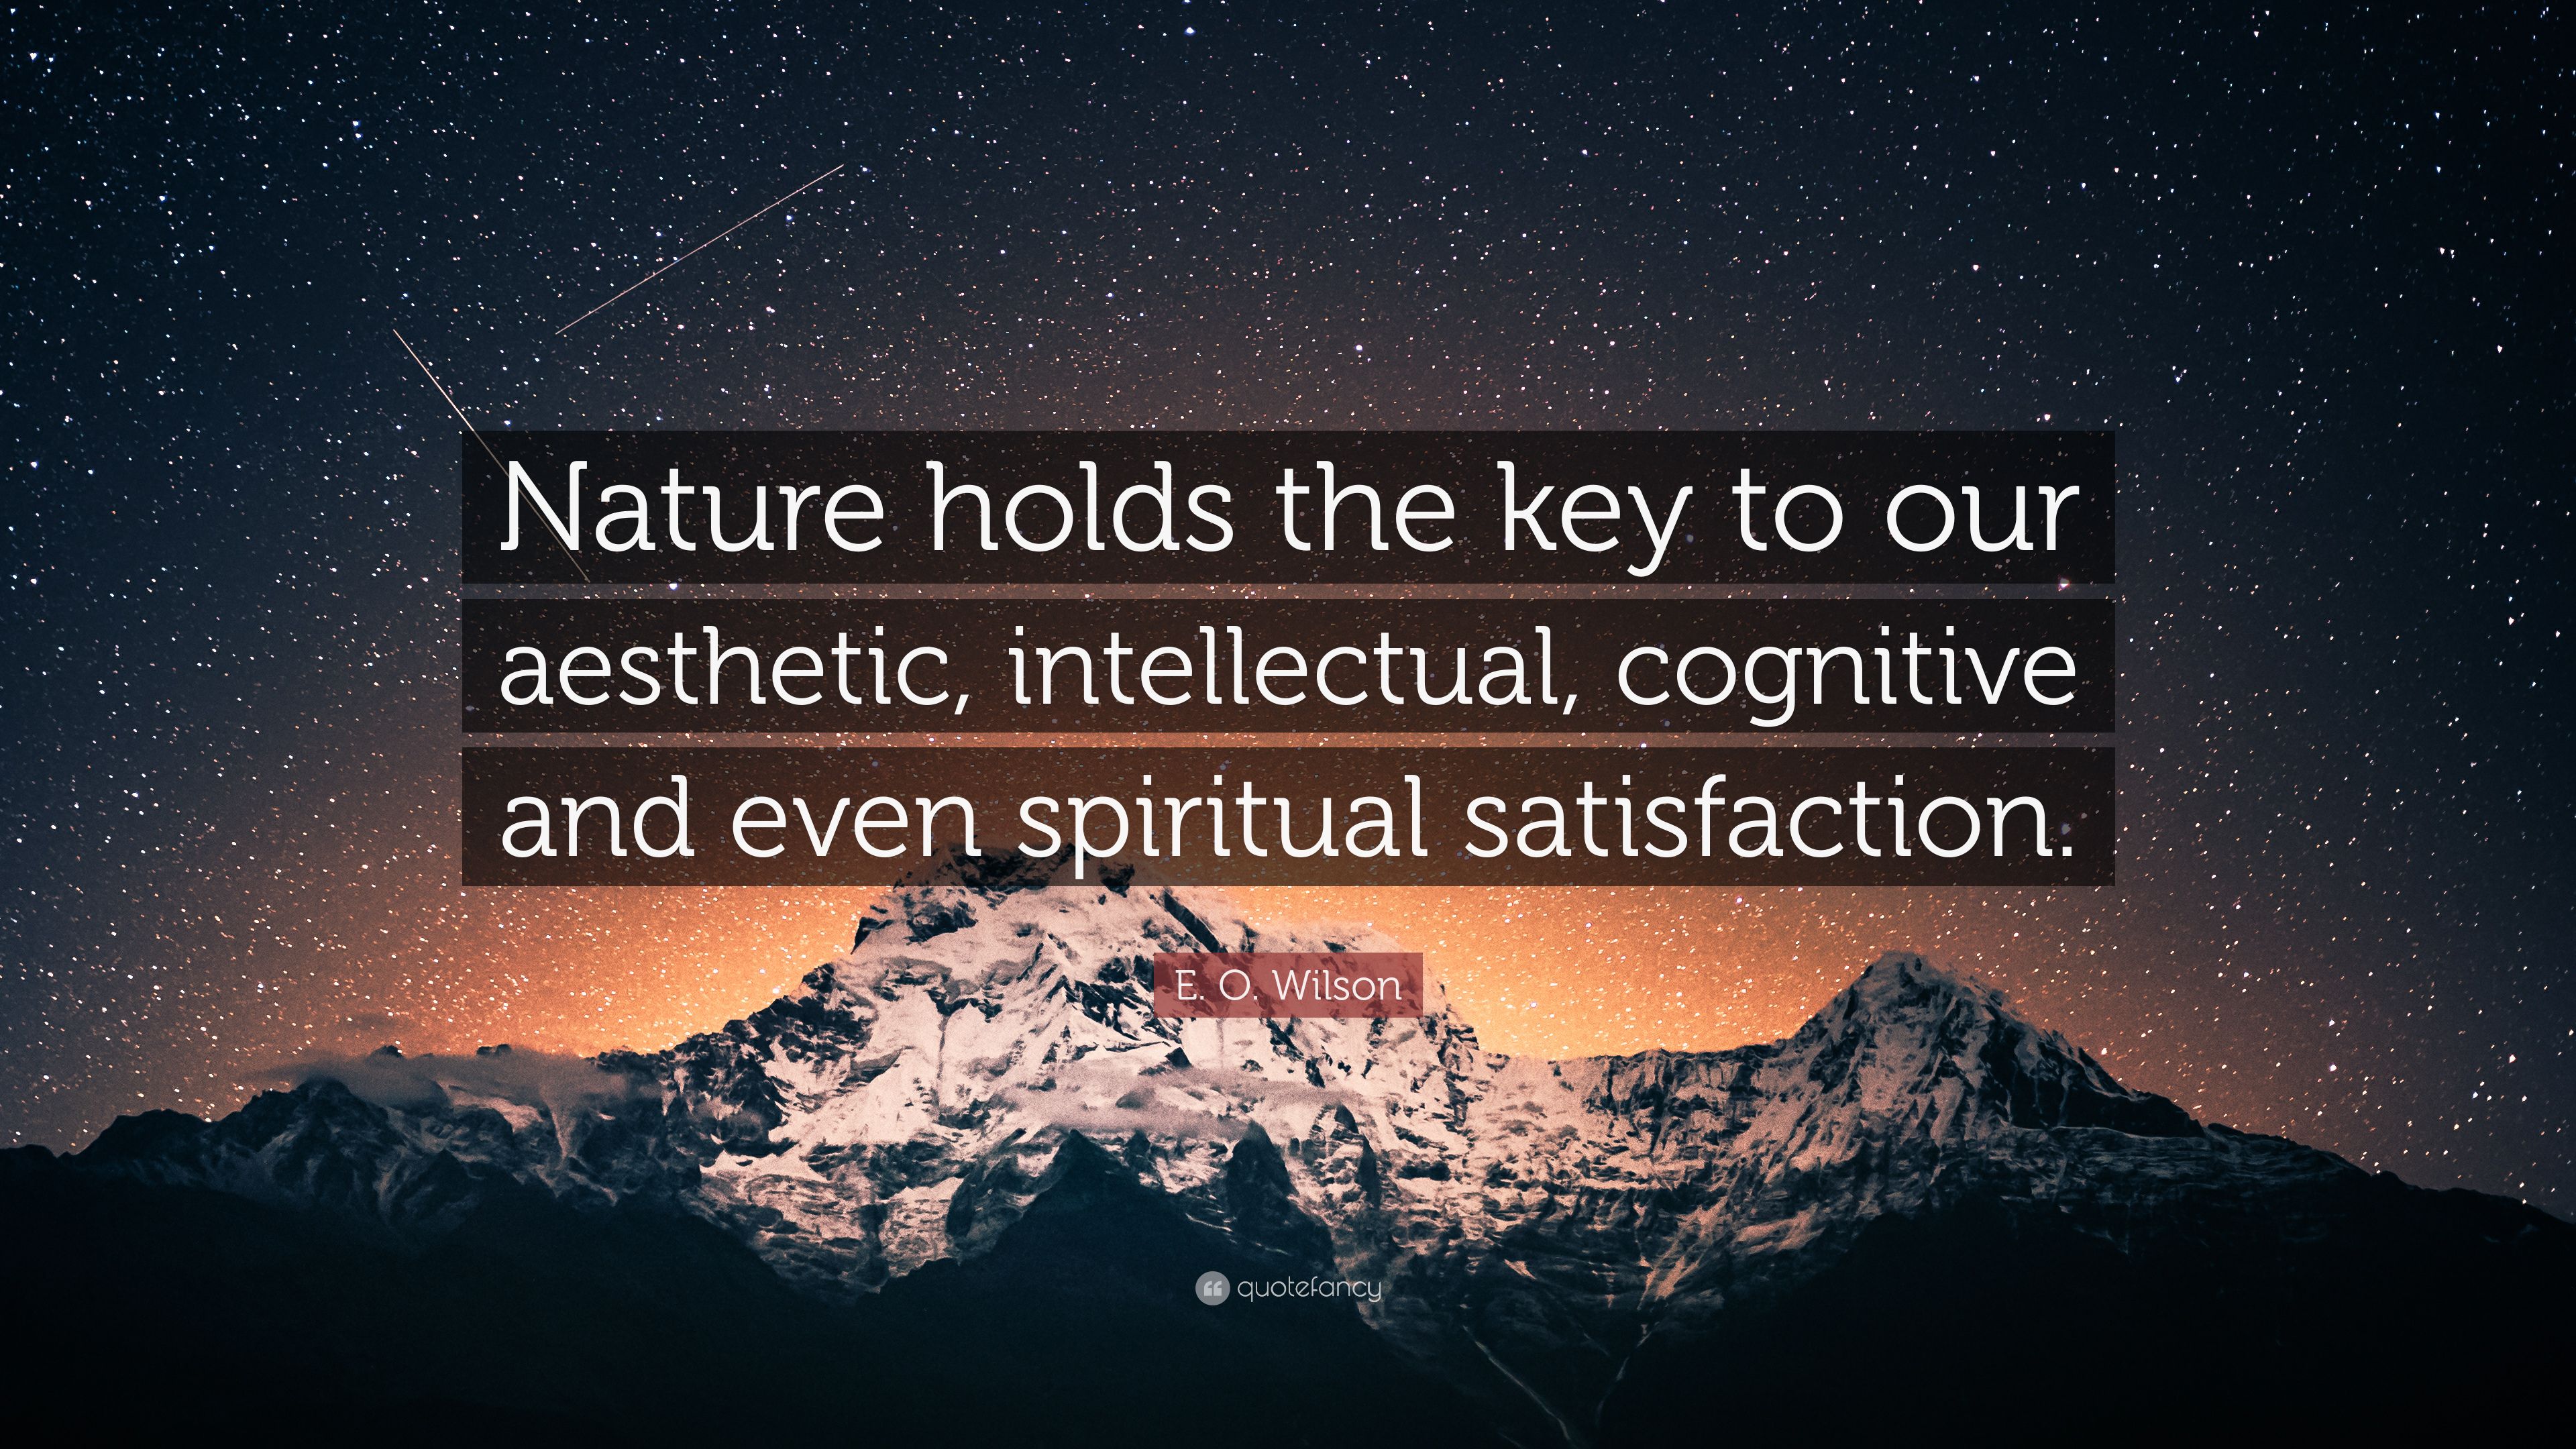 E. O. Wilson Quote: “Nature holdsquotefancy.com